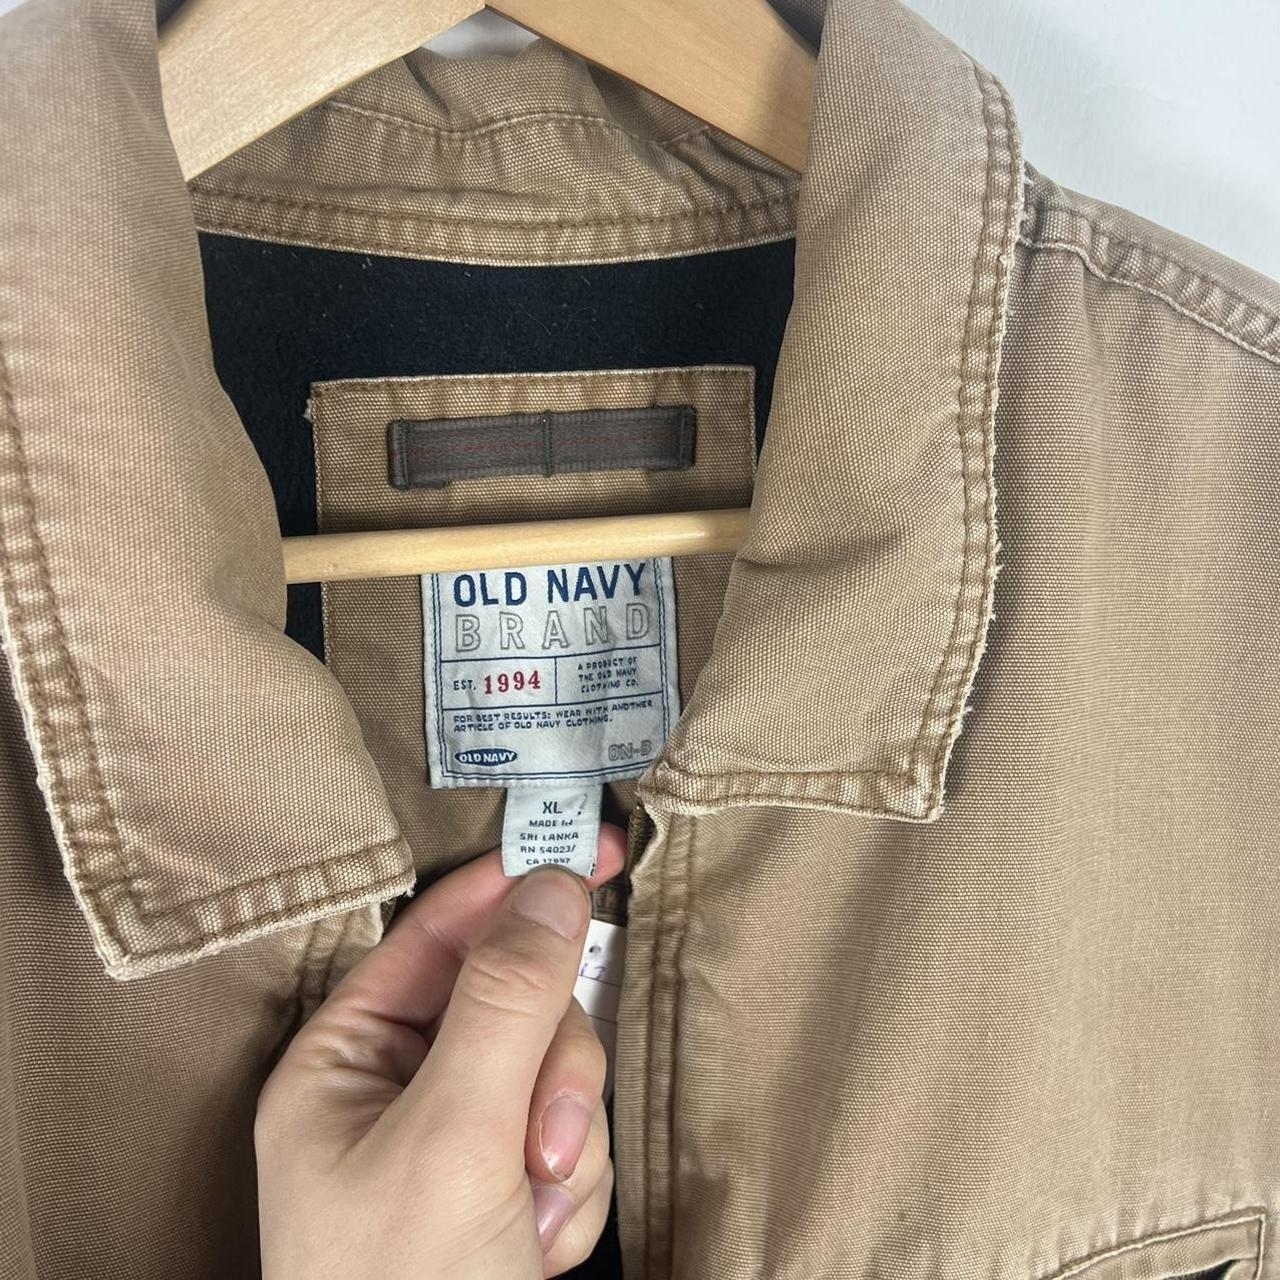 Vintage workwear jacket XL